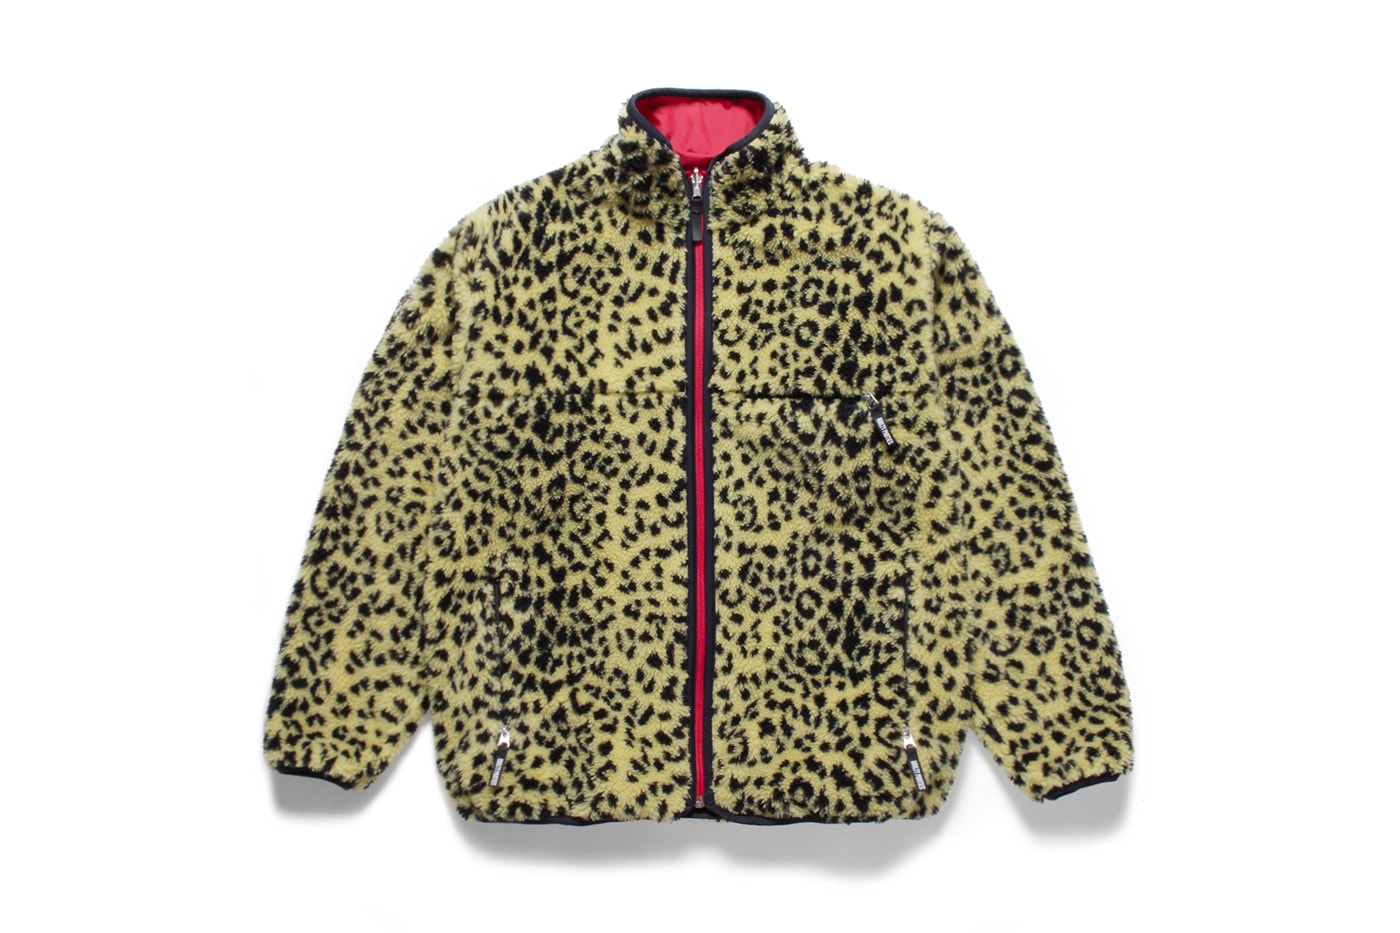 WACKO MARIA Leopard Print Reversible Fleece Jacket outerwear zip up sweaters guilty parties paradise tokyo pattern animal nylon fall winter 2019